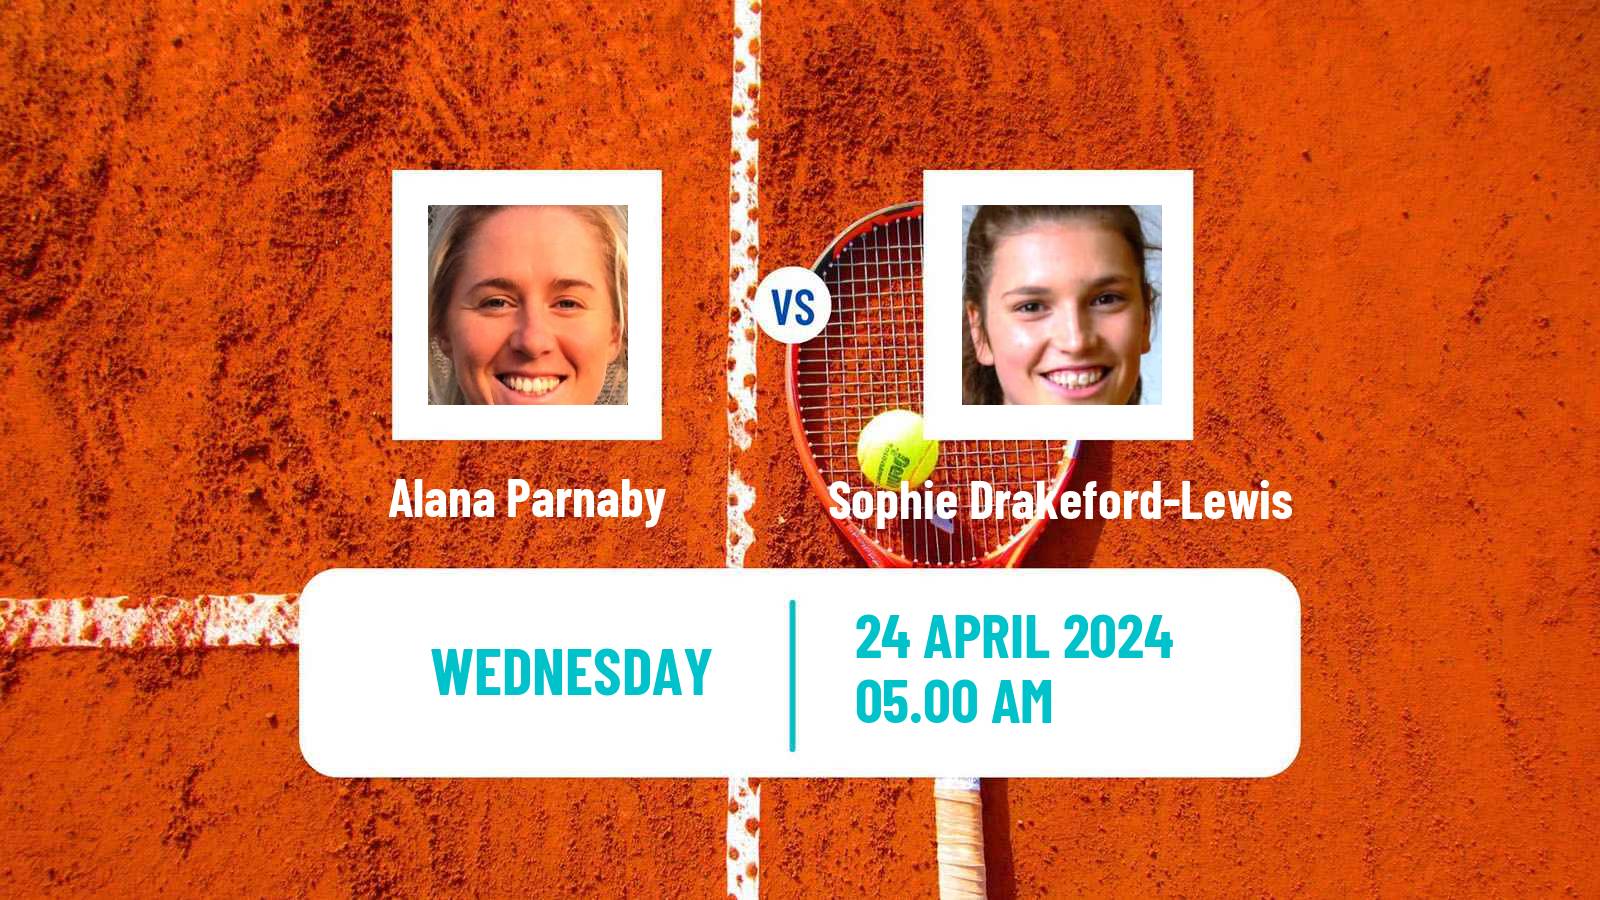 Tennis ITF W35 Nottingham Women Alana Parnaby - Sophie Drakeford-Lewis